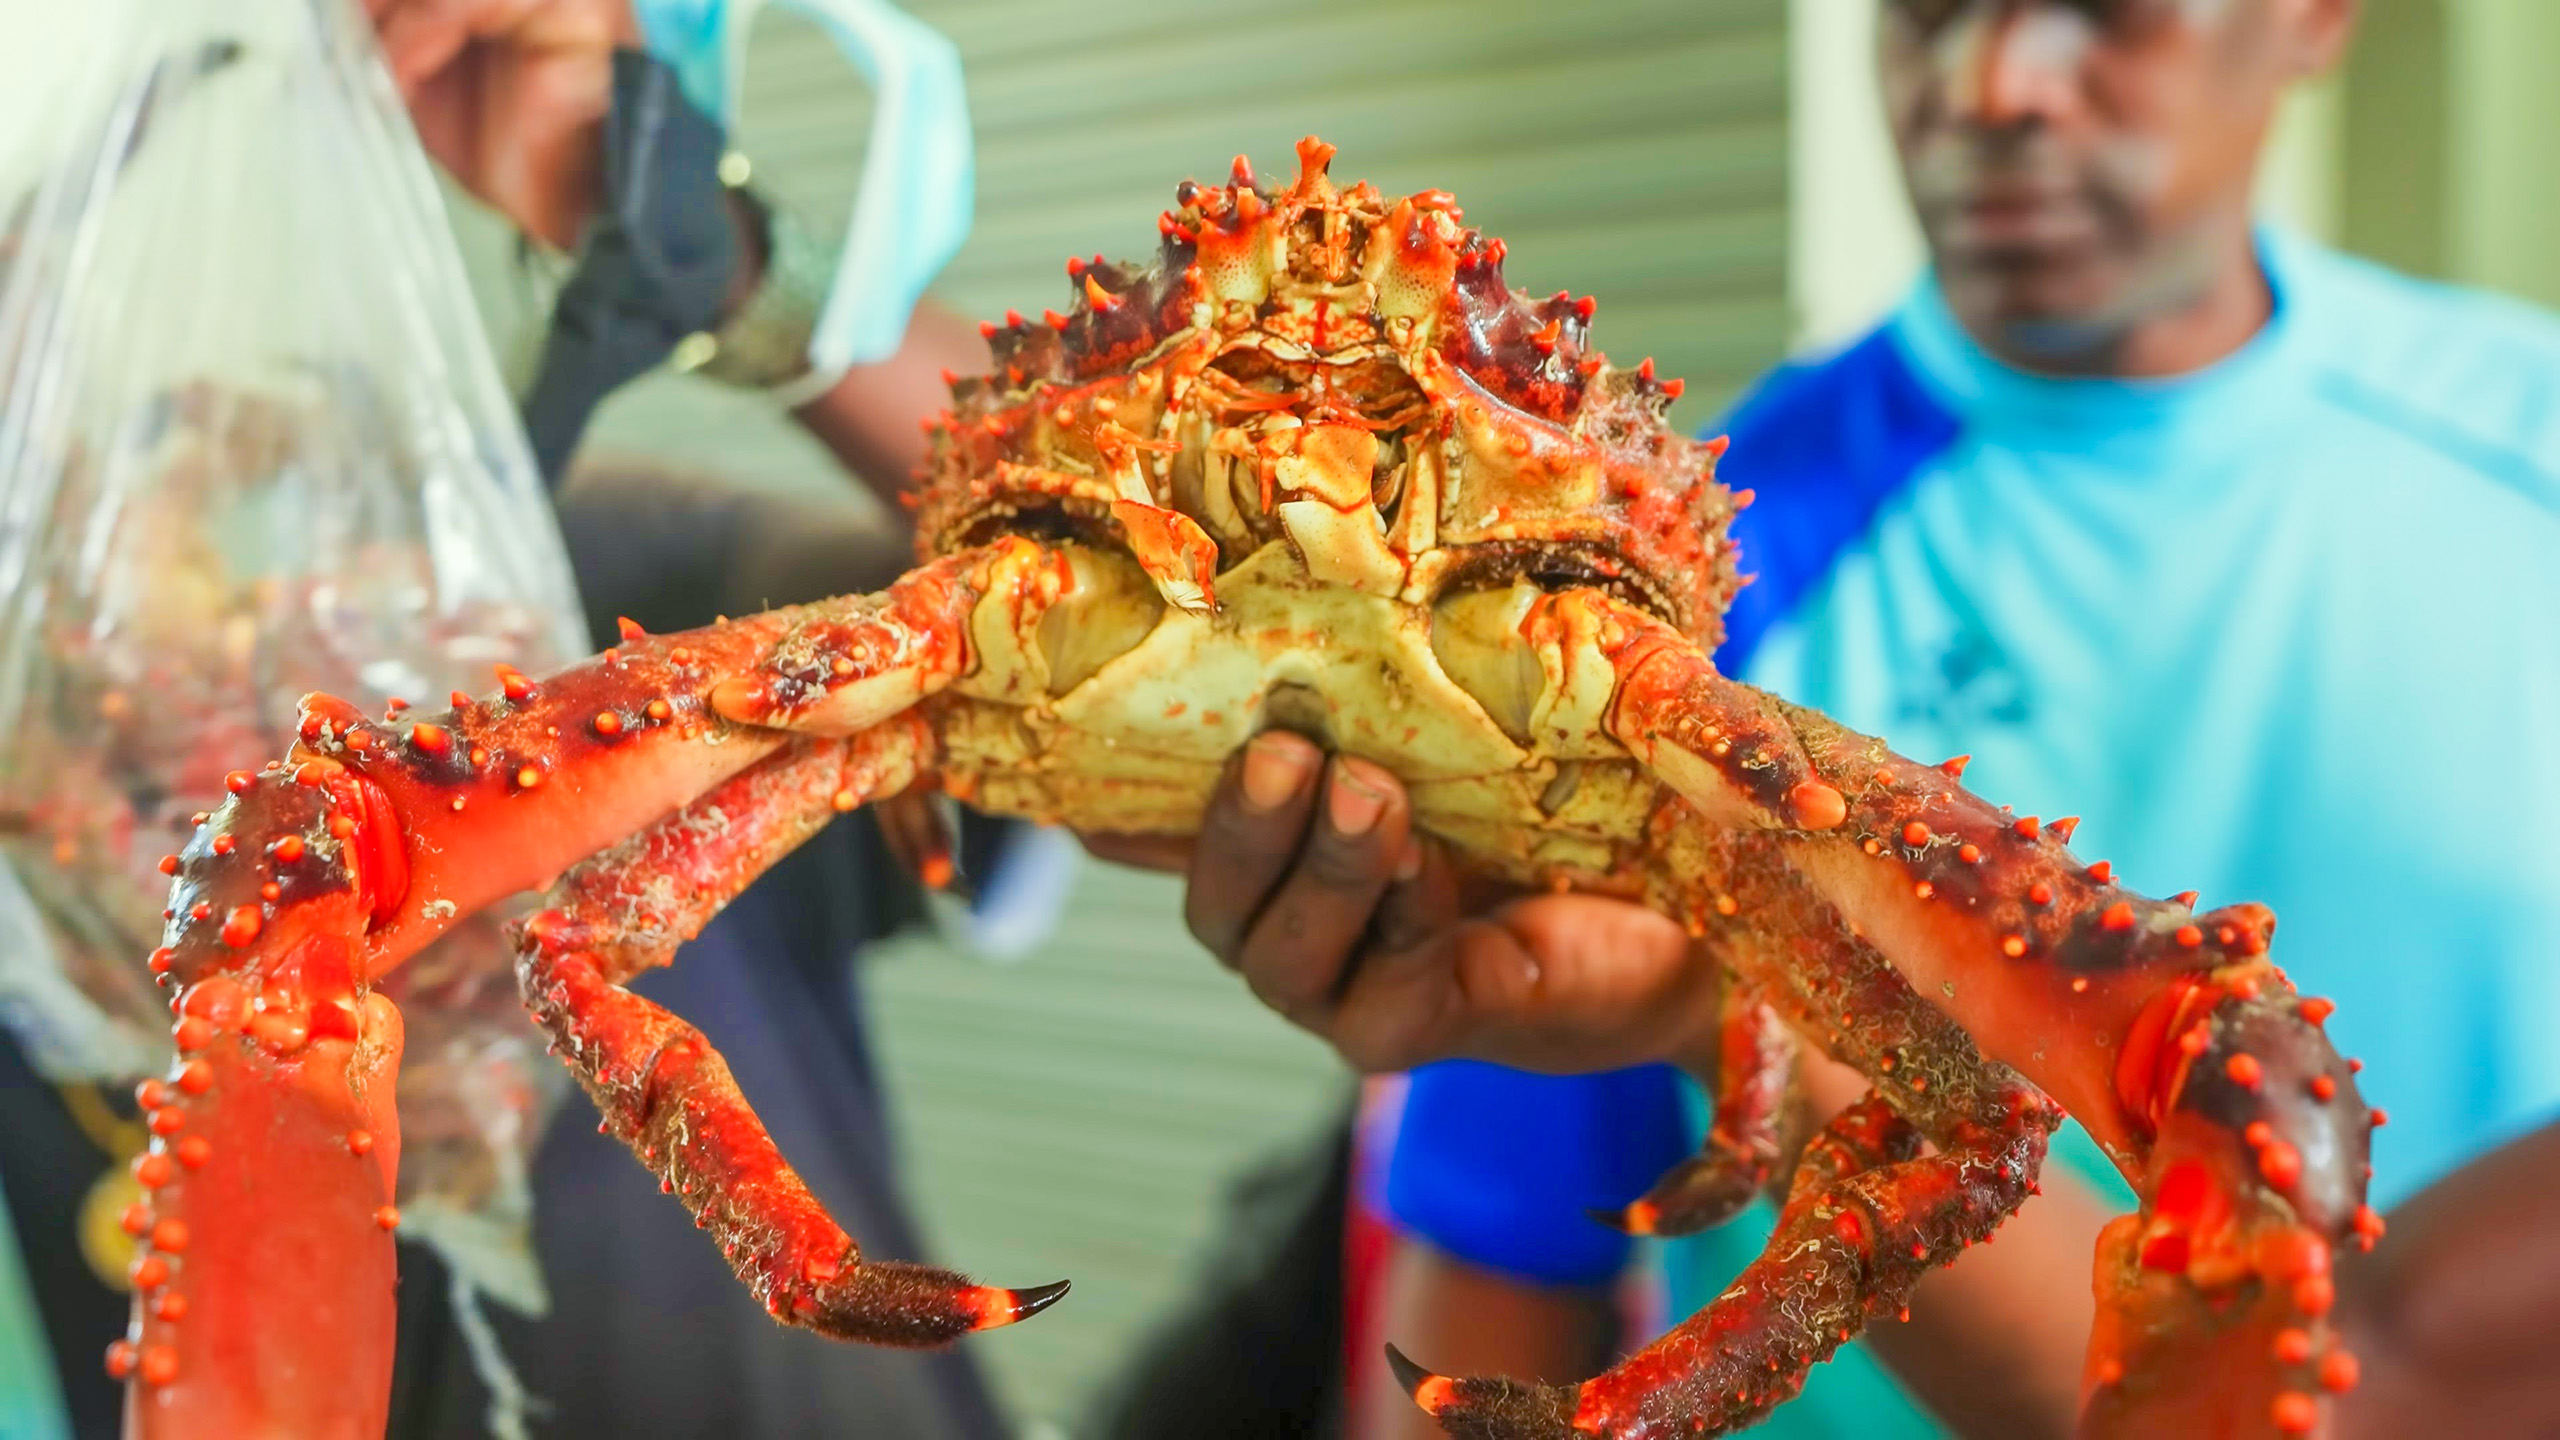 A vendor holds a large crab in a market in Roseau, Dominica | Davidsbeenhere